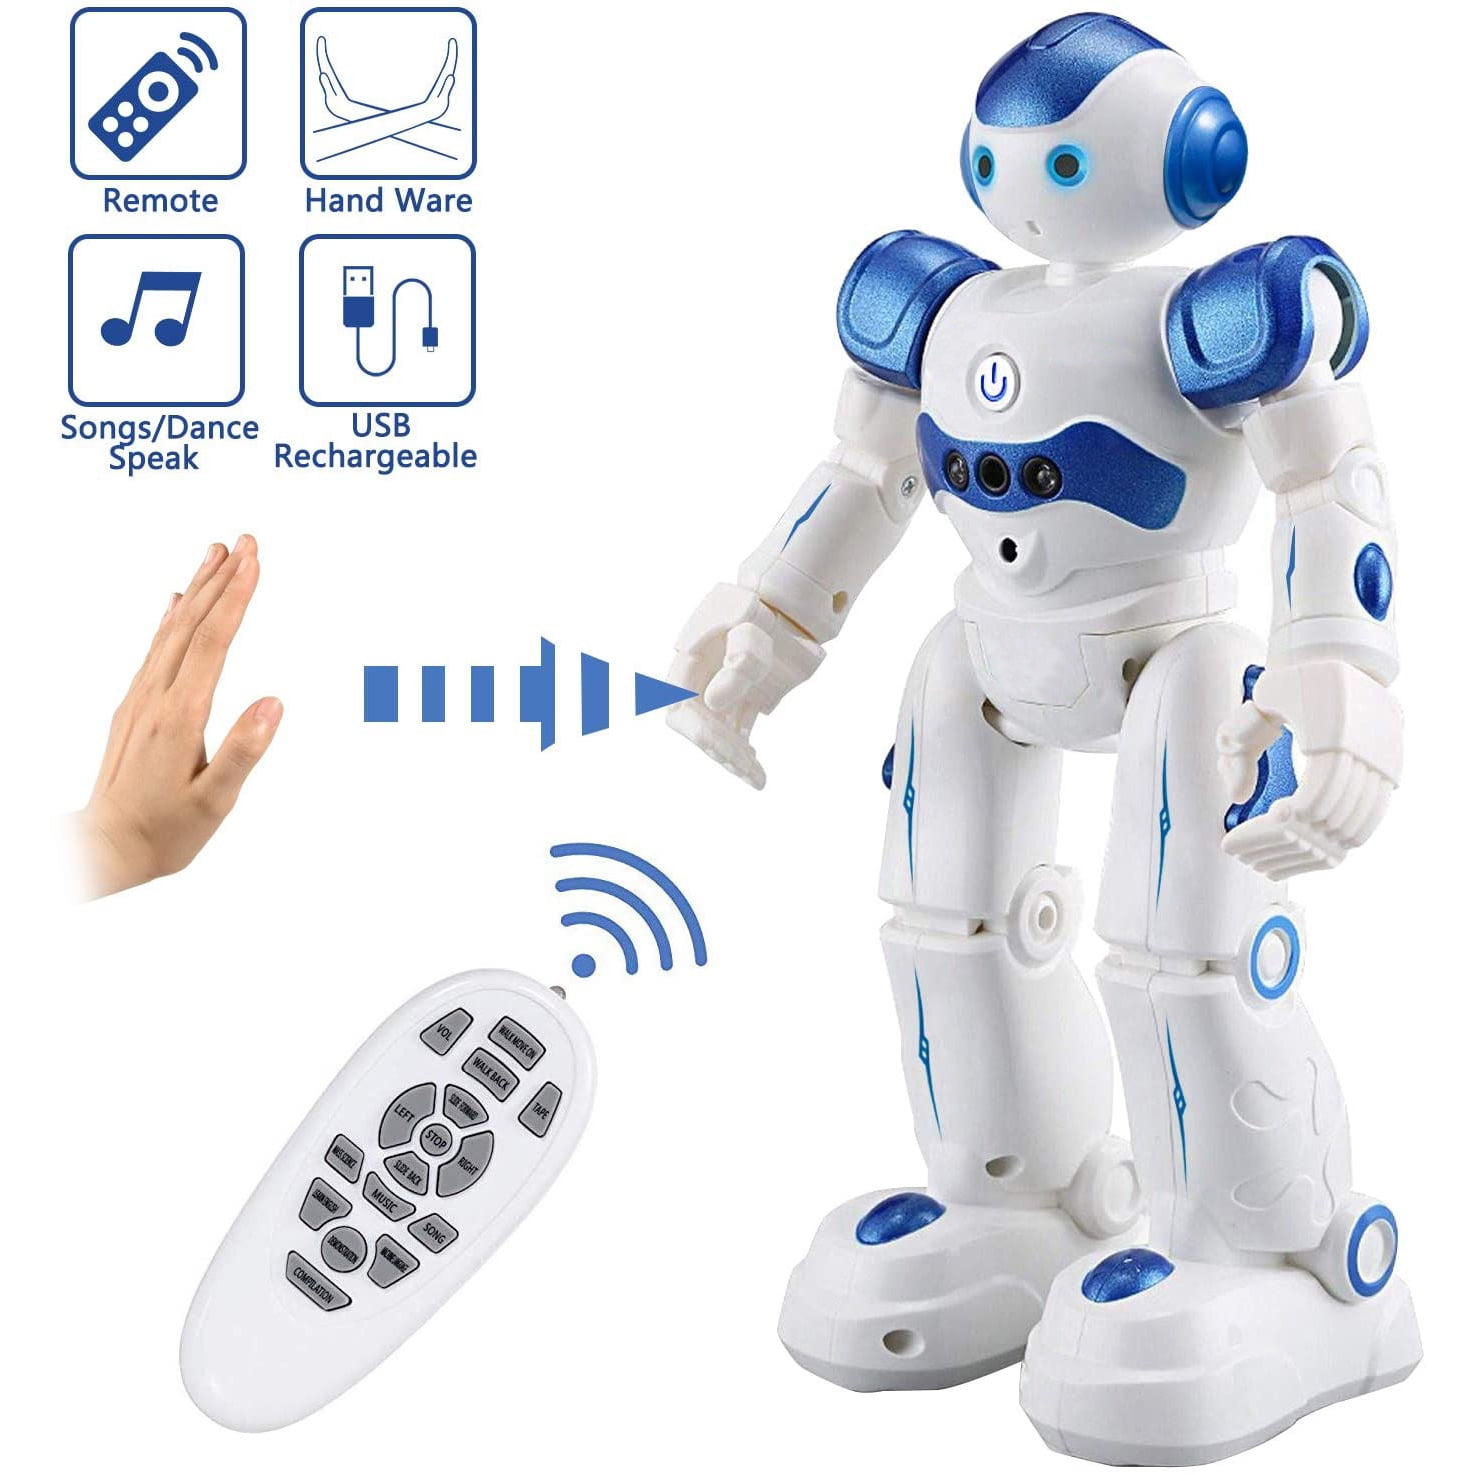 RC Robot Toys for Kids Boys Remote Control Gesture Sensing Dancing Singing Smart 